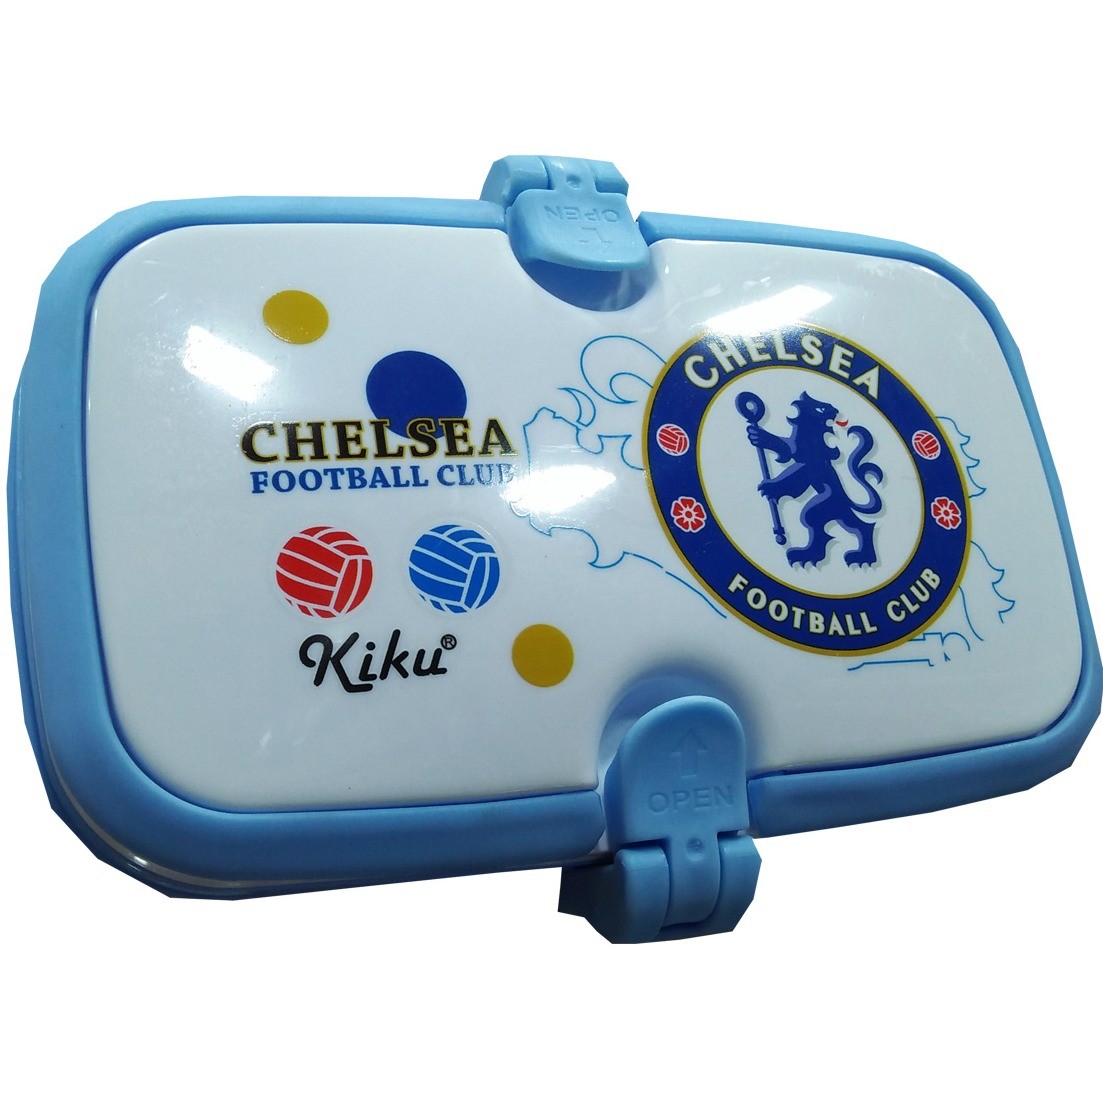 Kiku Chelsea Football Club Lunch Box for Kids - White & Blue